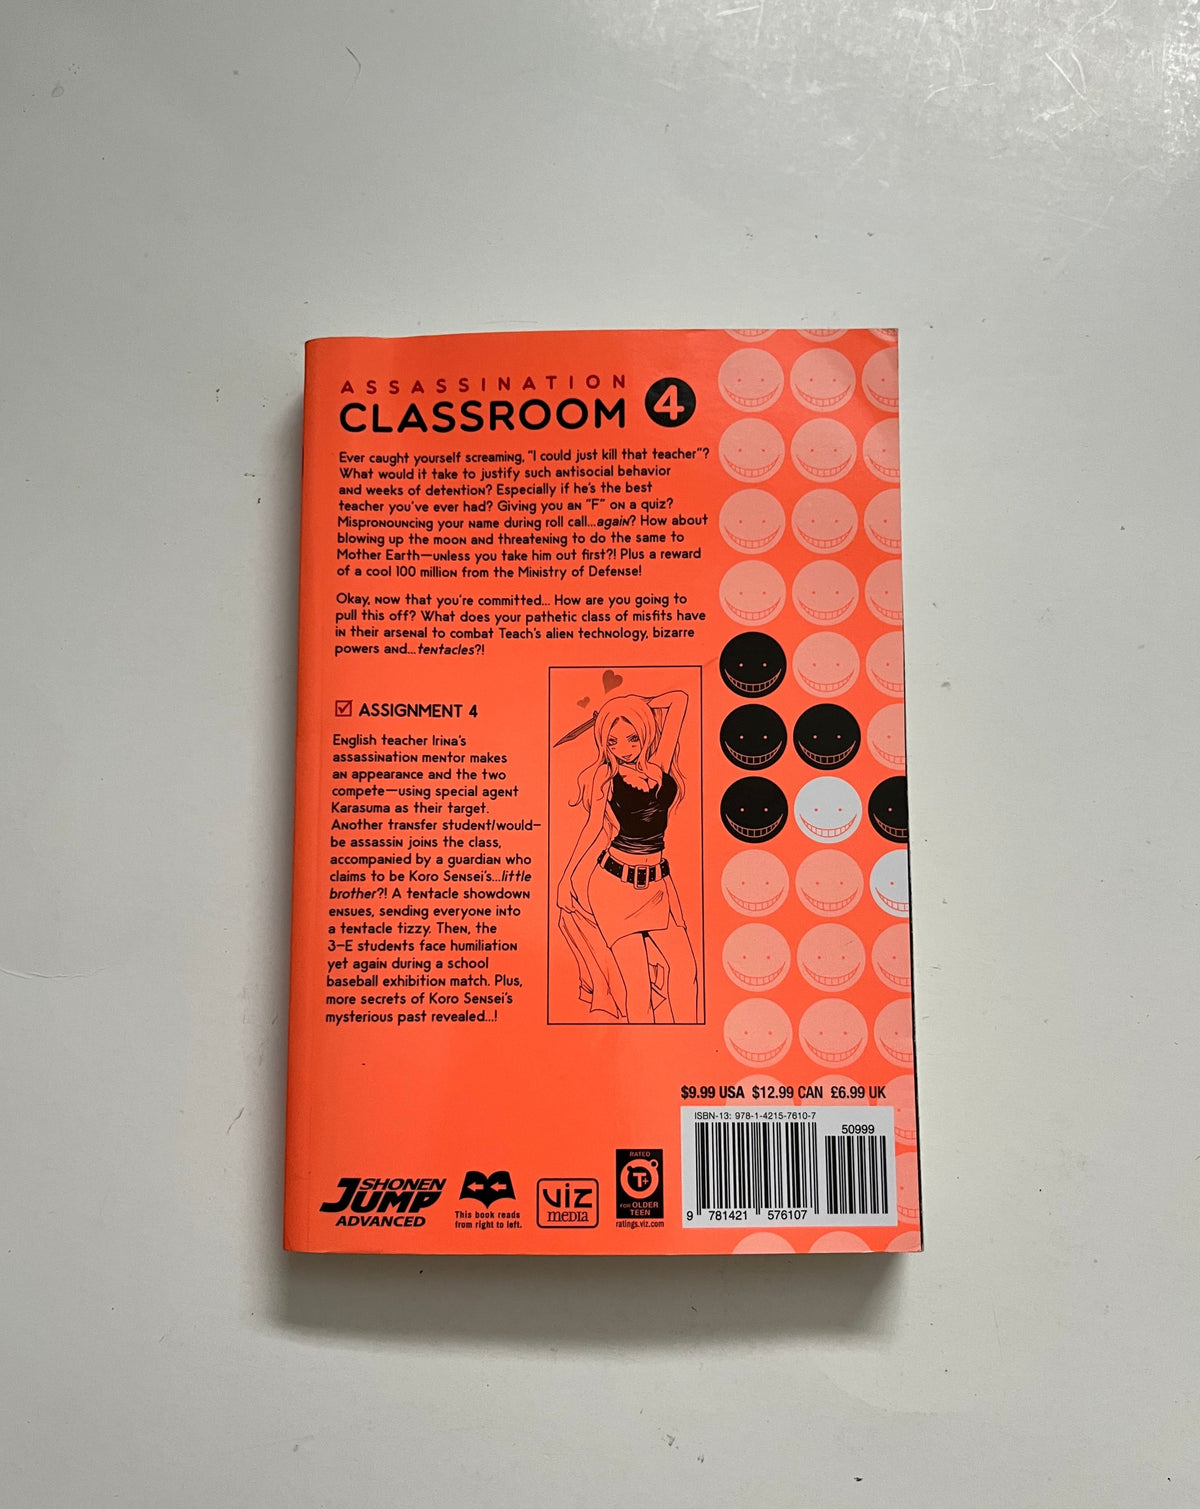 Assassination Classroom 4 by Yusei Matsui